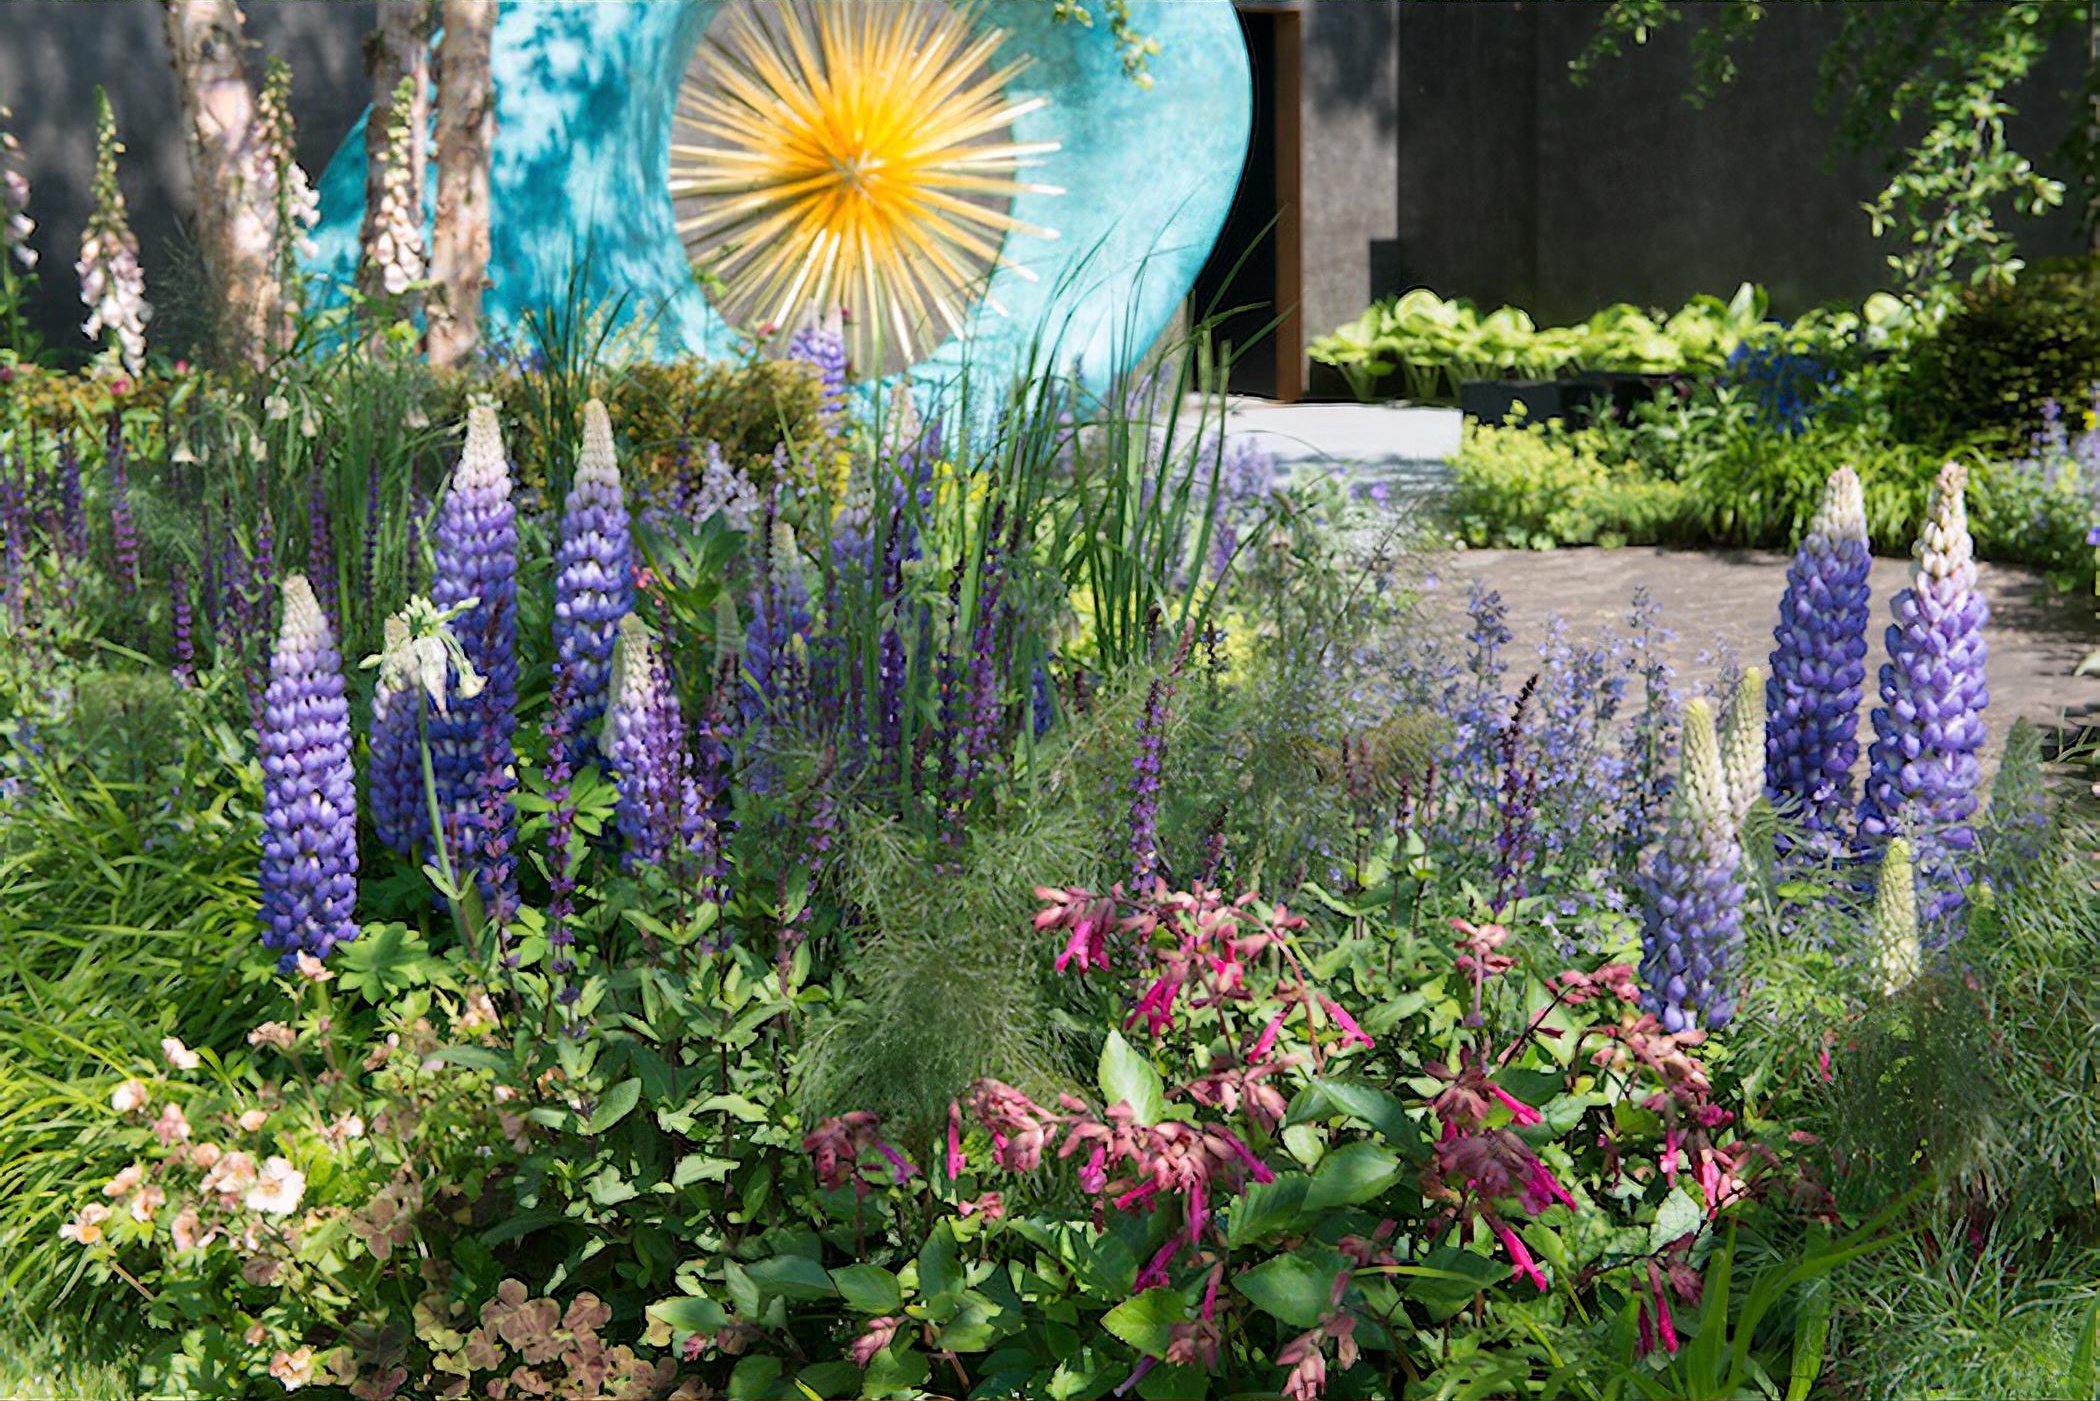 The David Harber and Savills Garden Chelsea Flower Show 2018 landscape and garden designer Nic Howard